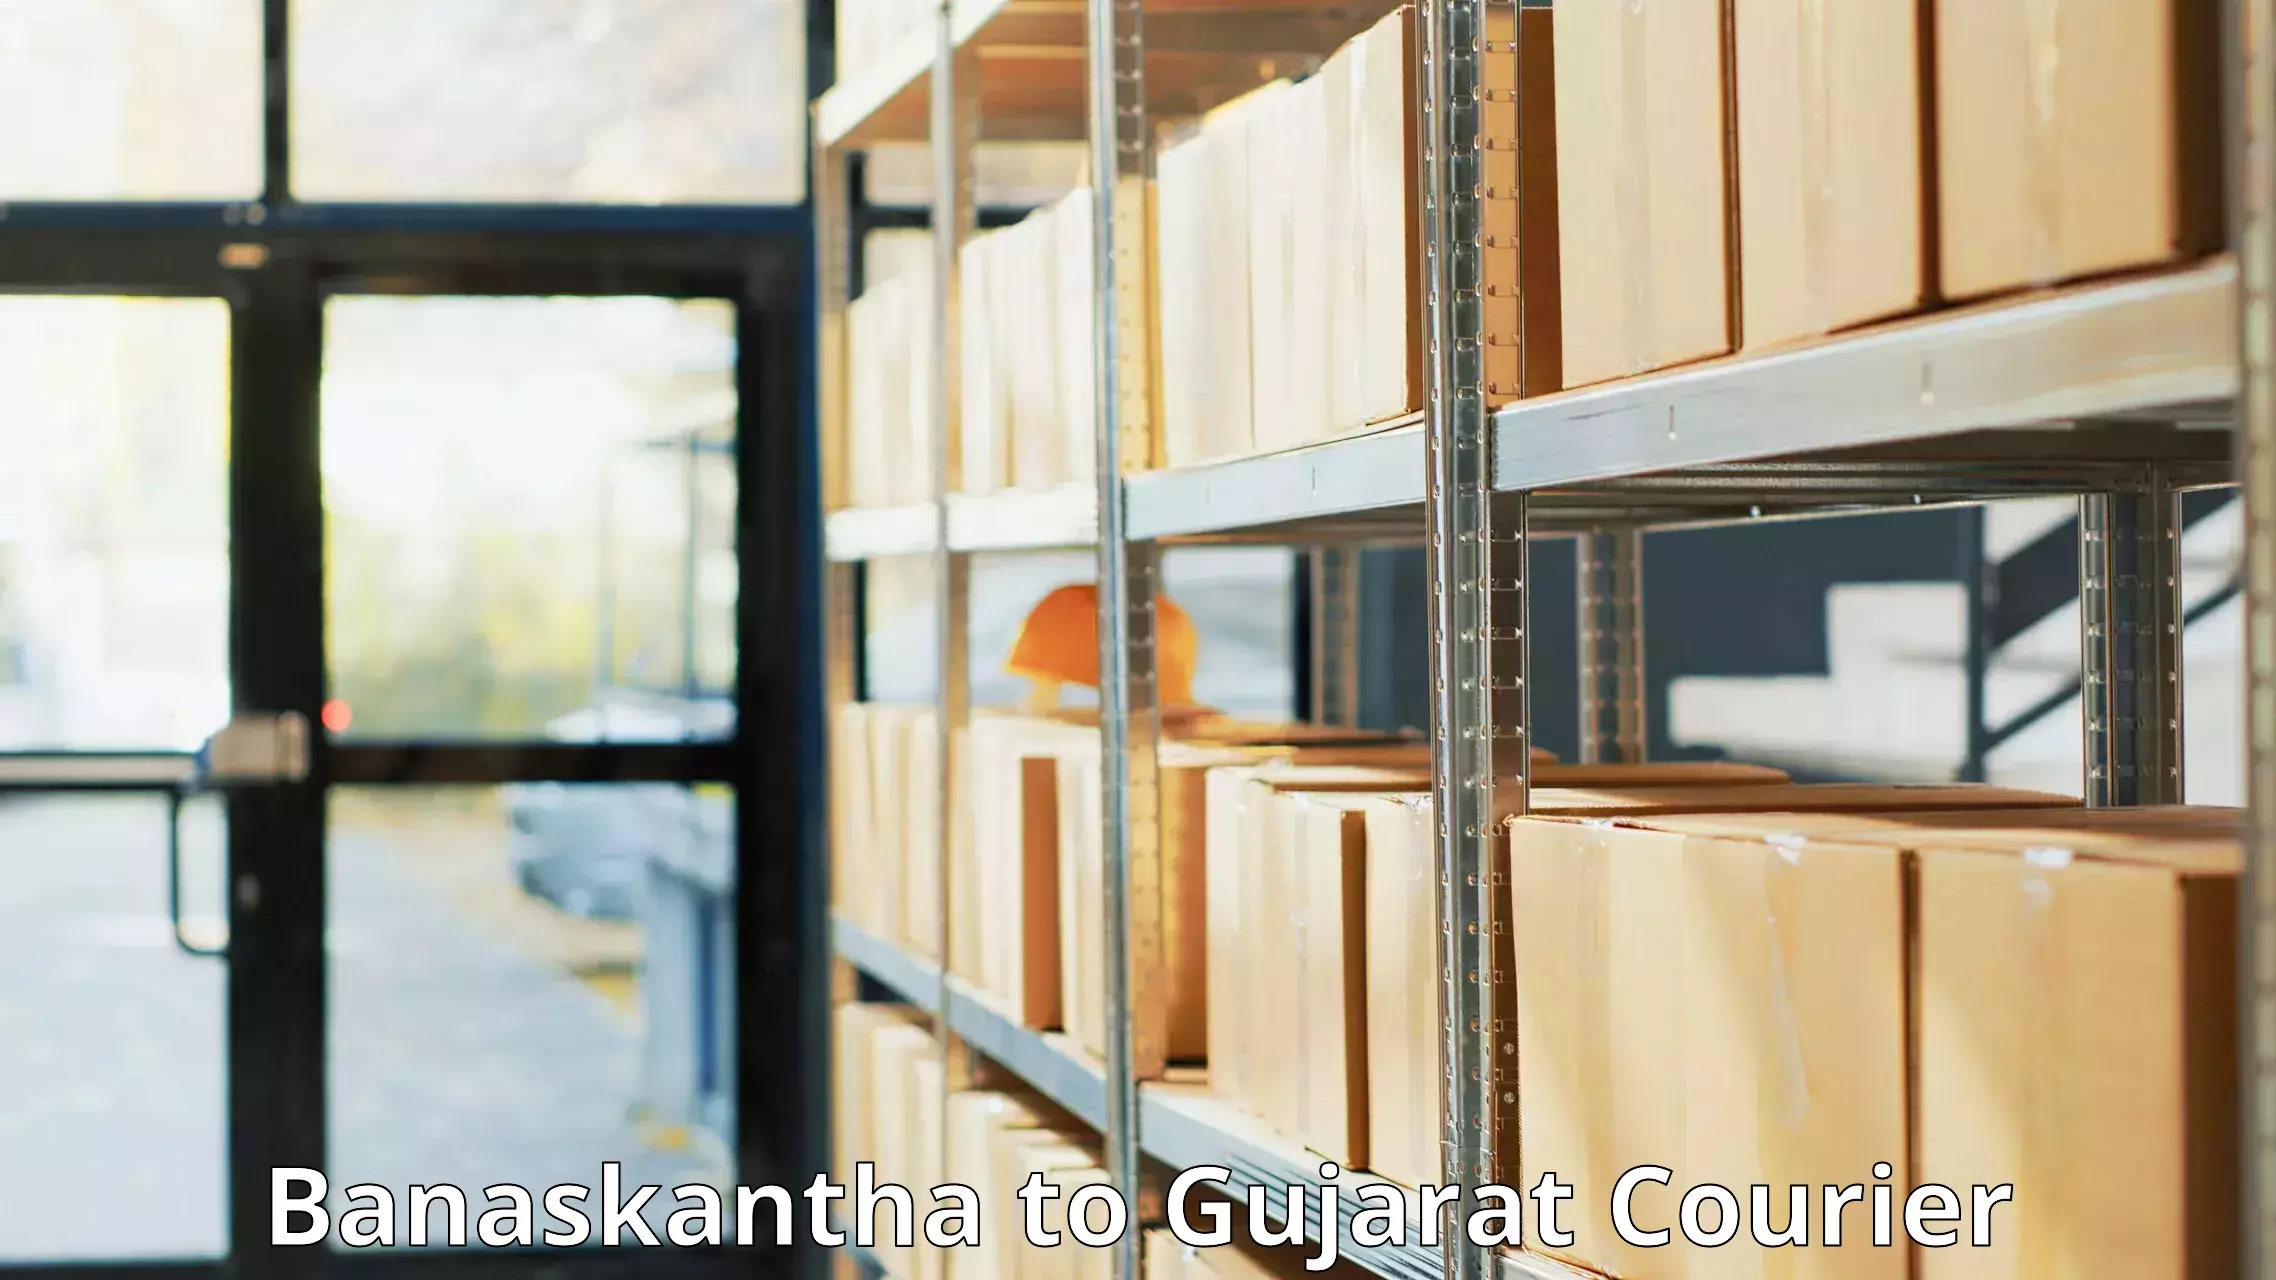 Expedited shipping methods Banaskantha to Patan Gujarat